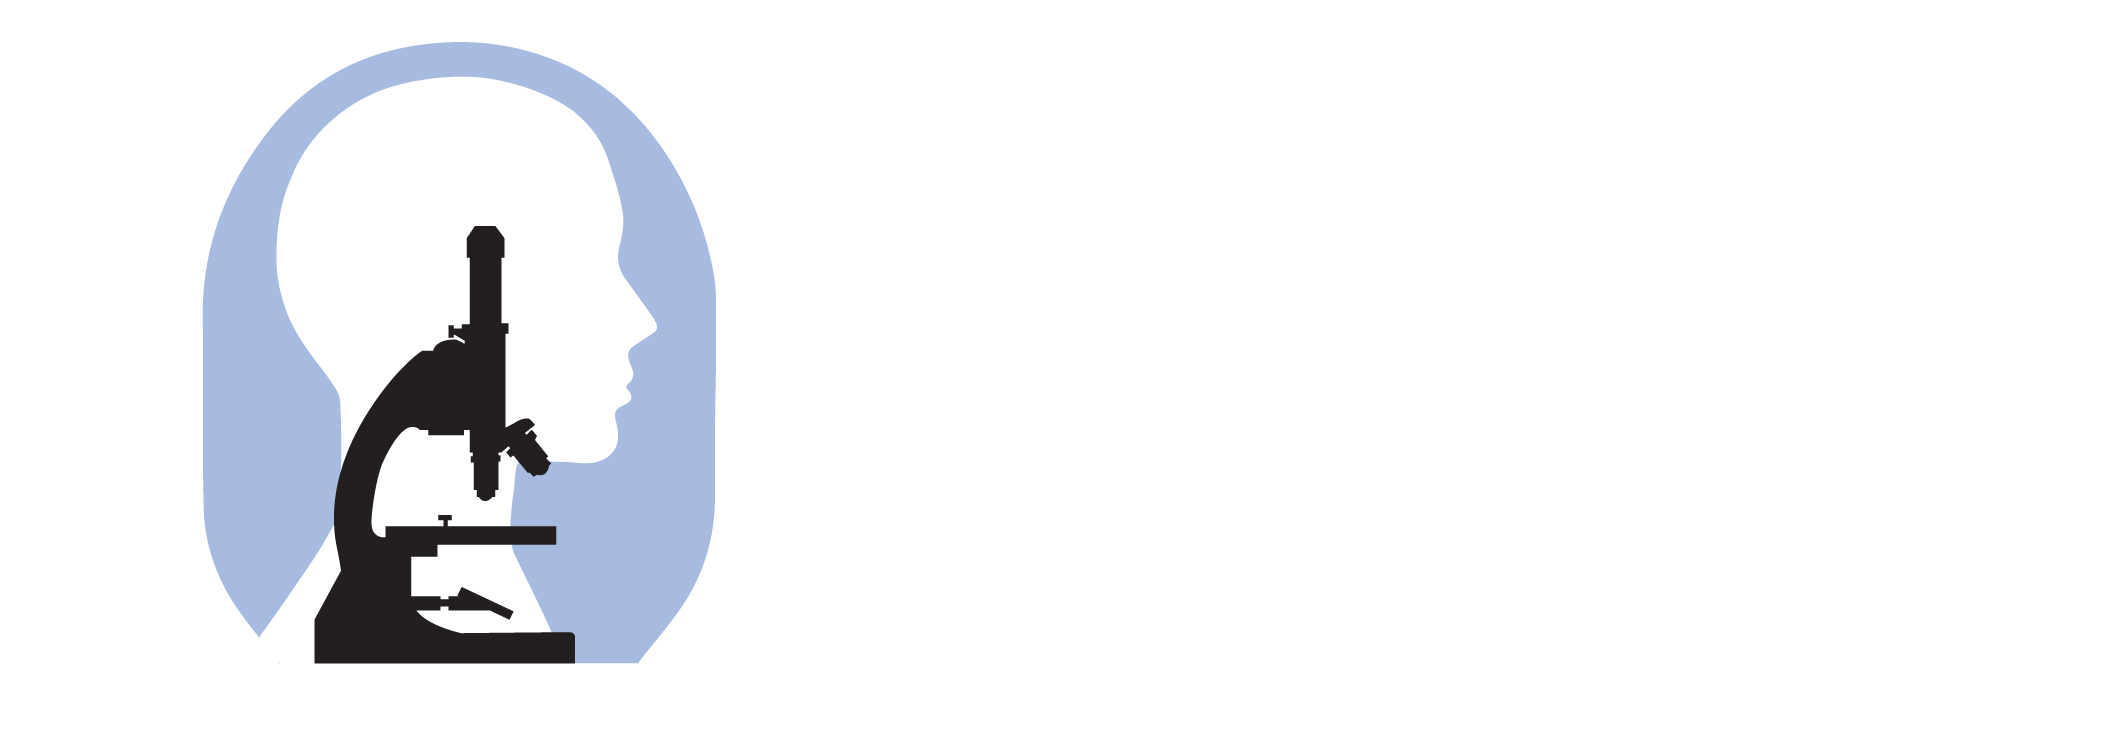 Oral, Head & Neck Pathology Laboratory